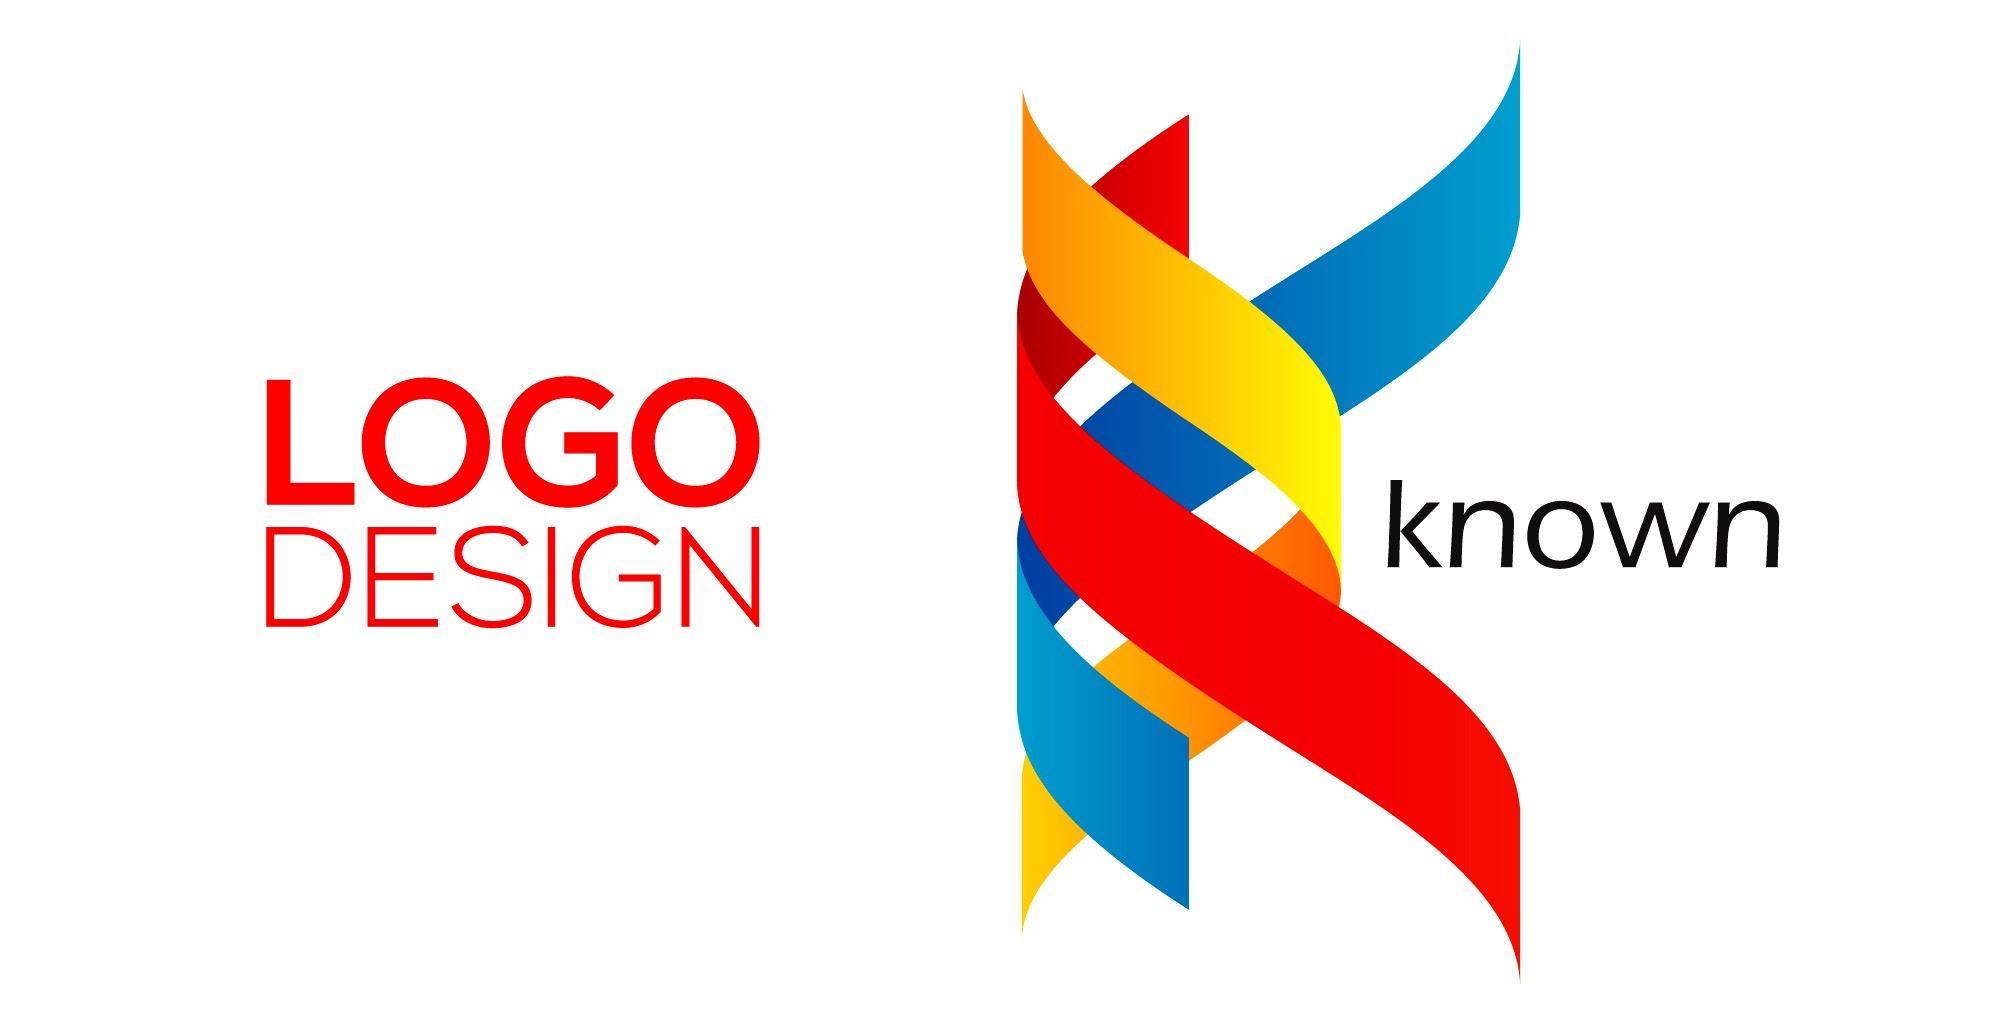 Google Design Logo - Logo Design | Jumia Production Services